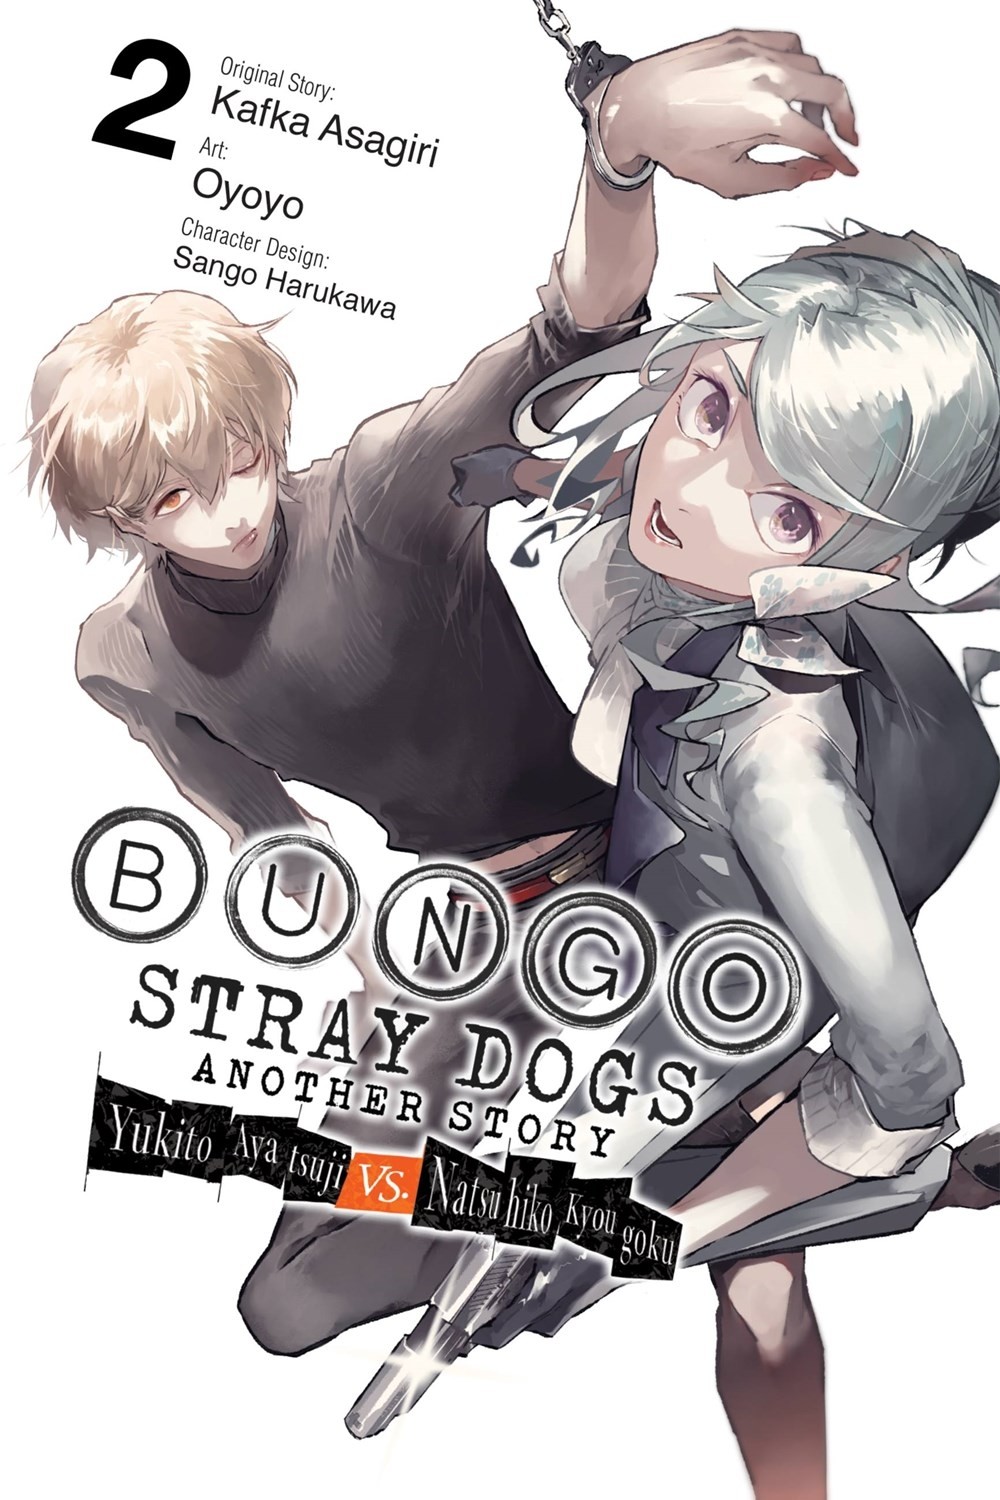 Bungo Stray Dogs: Another Story: Yukito Ayatsuji vs. Natsuhiko Kyogoku, Vol. 02